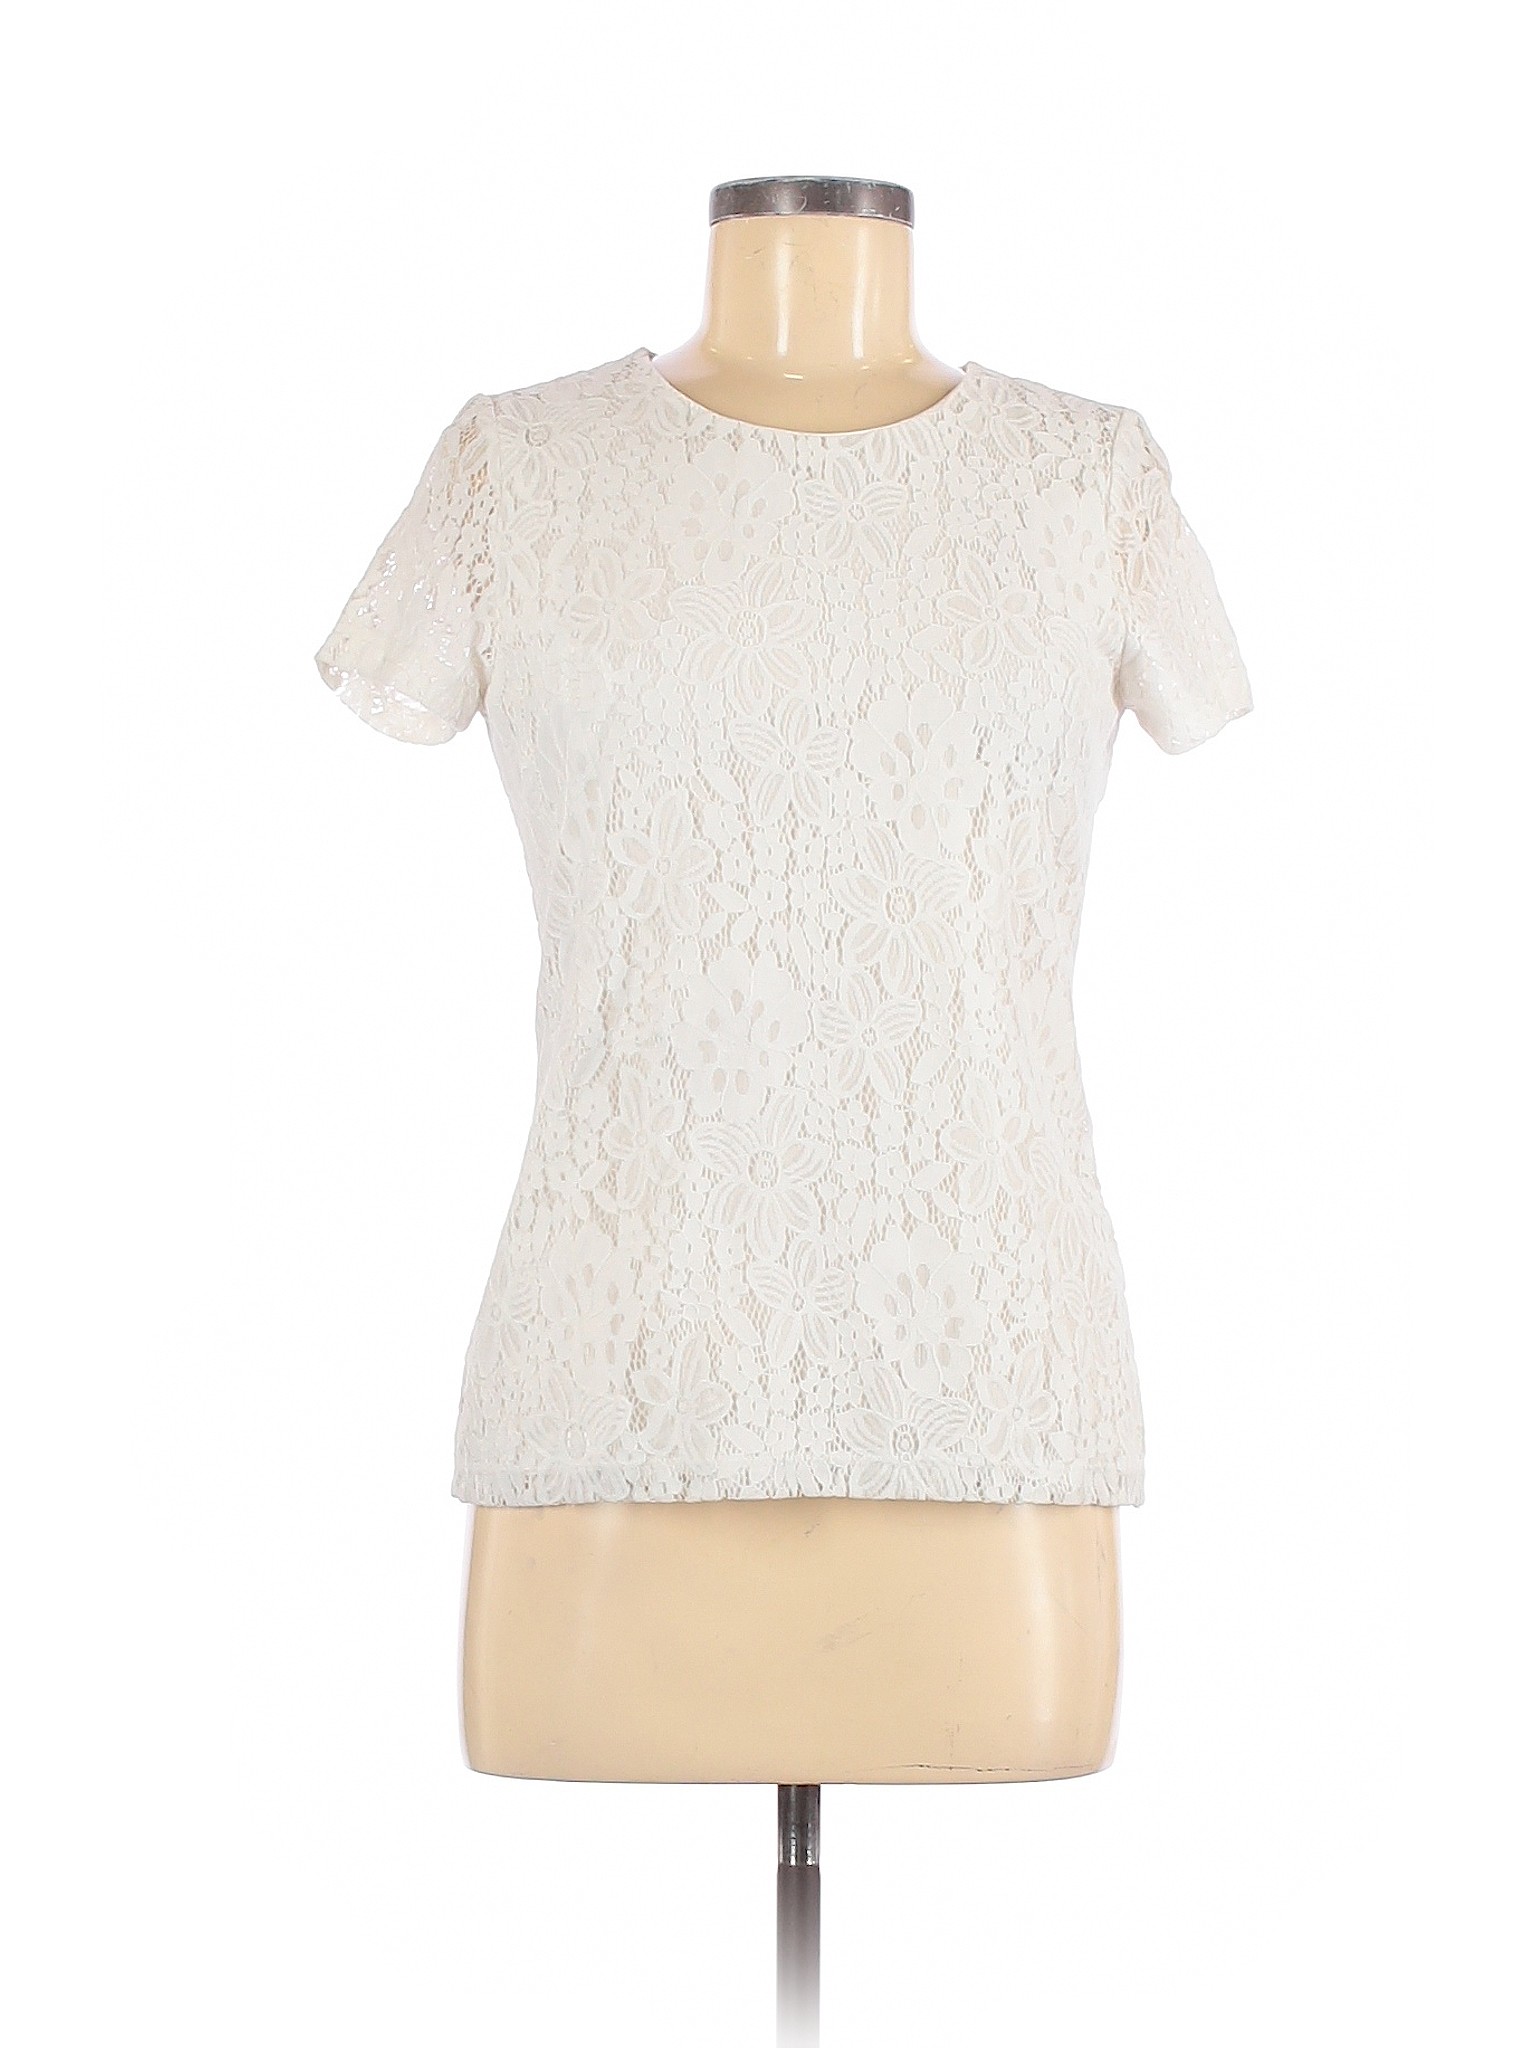 Tommy Hilfiger Women White Short Sleeve Blouse XS | eBay